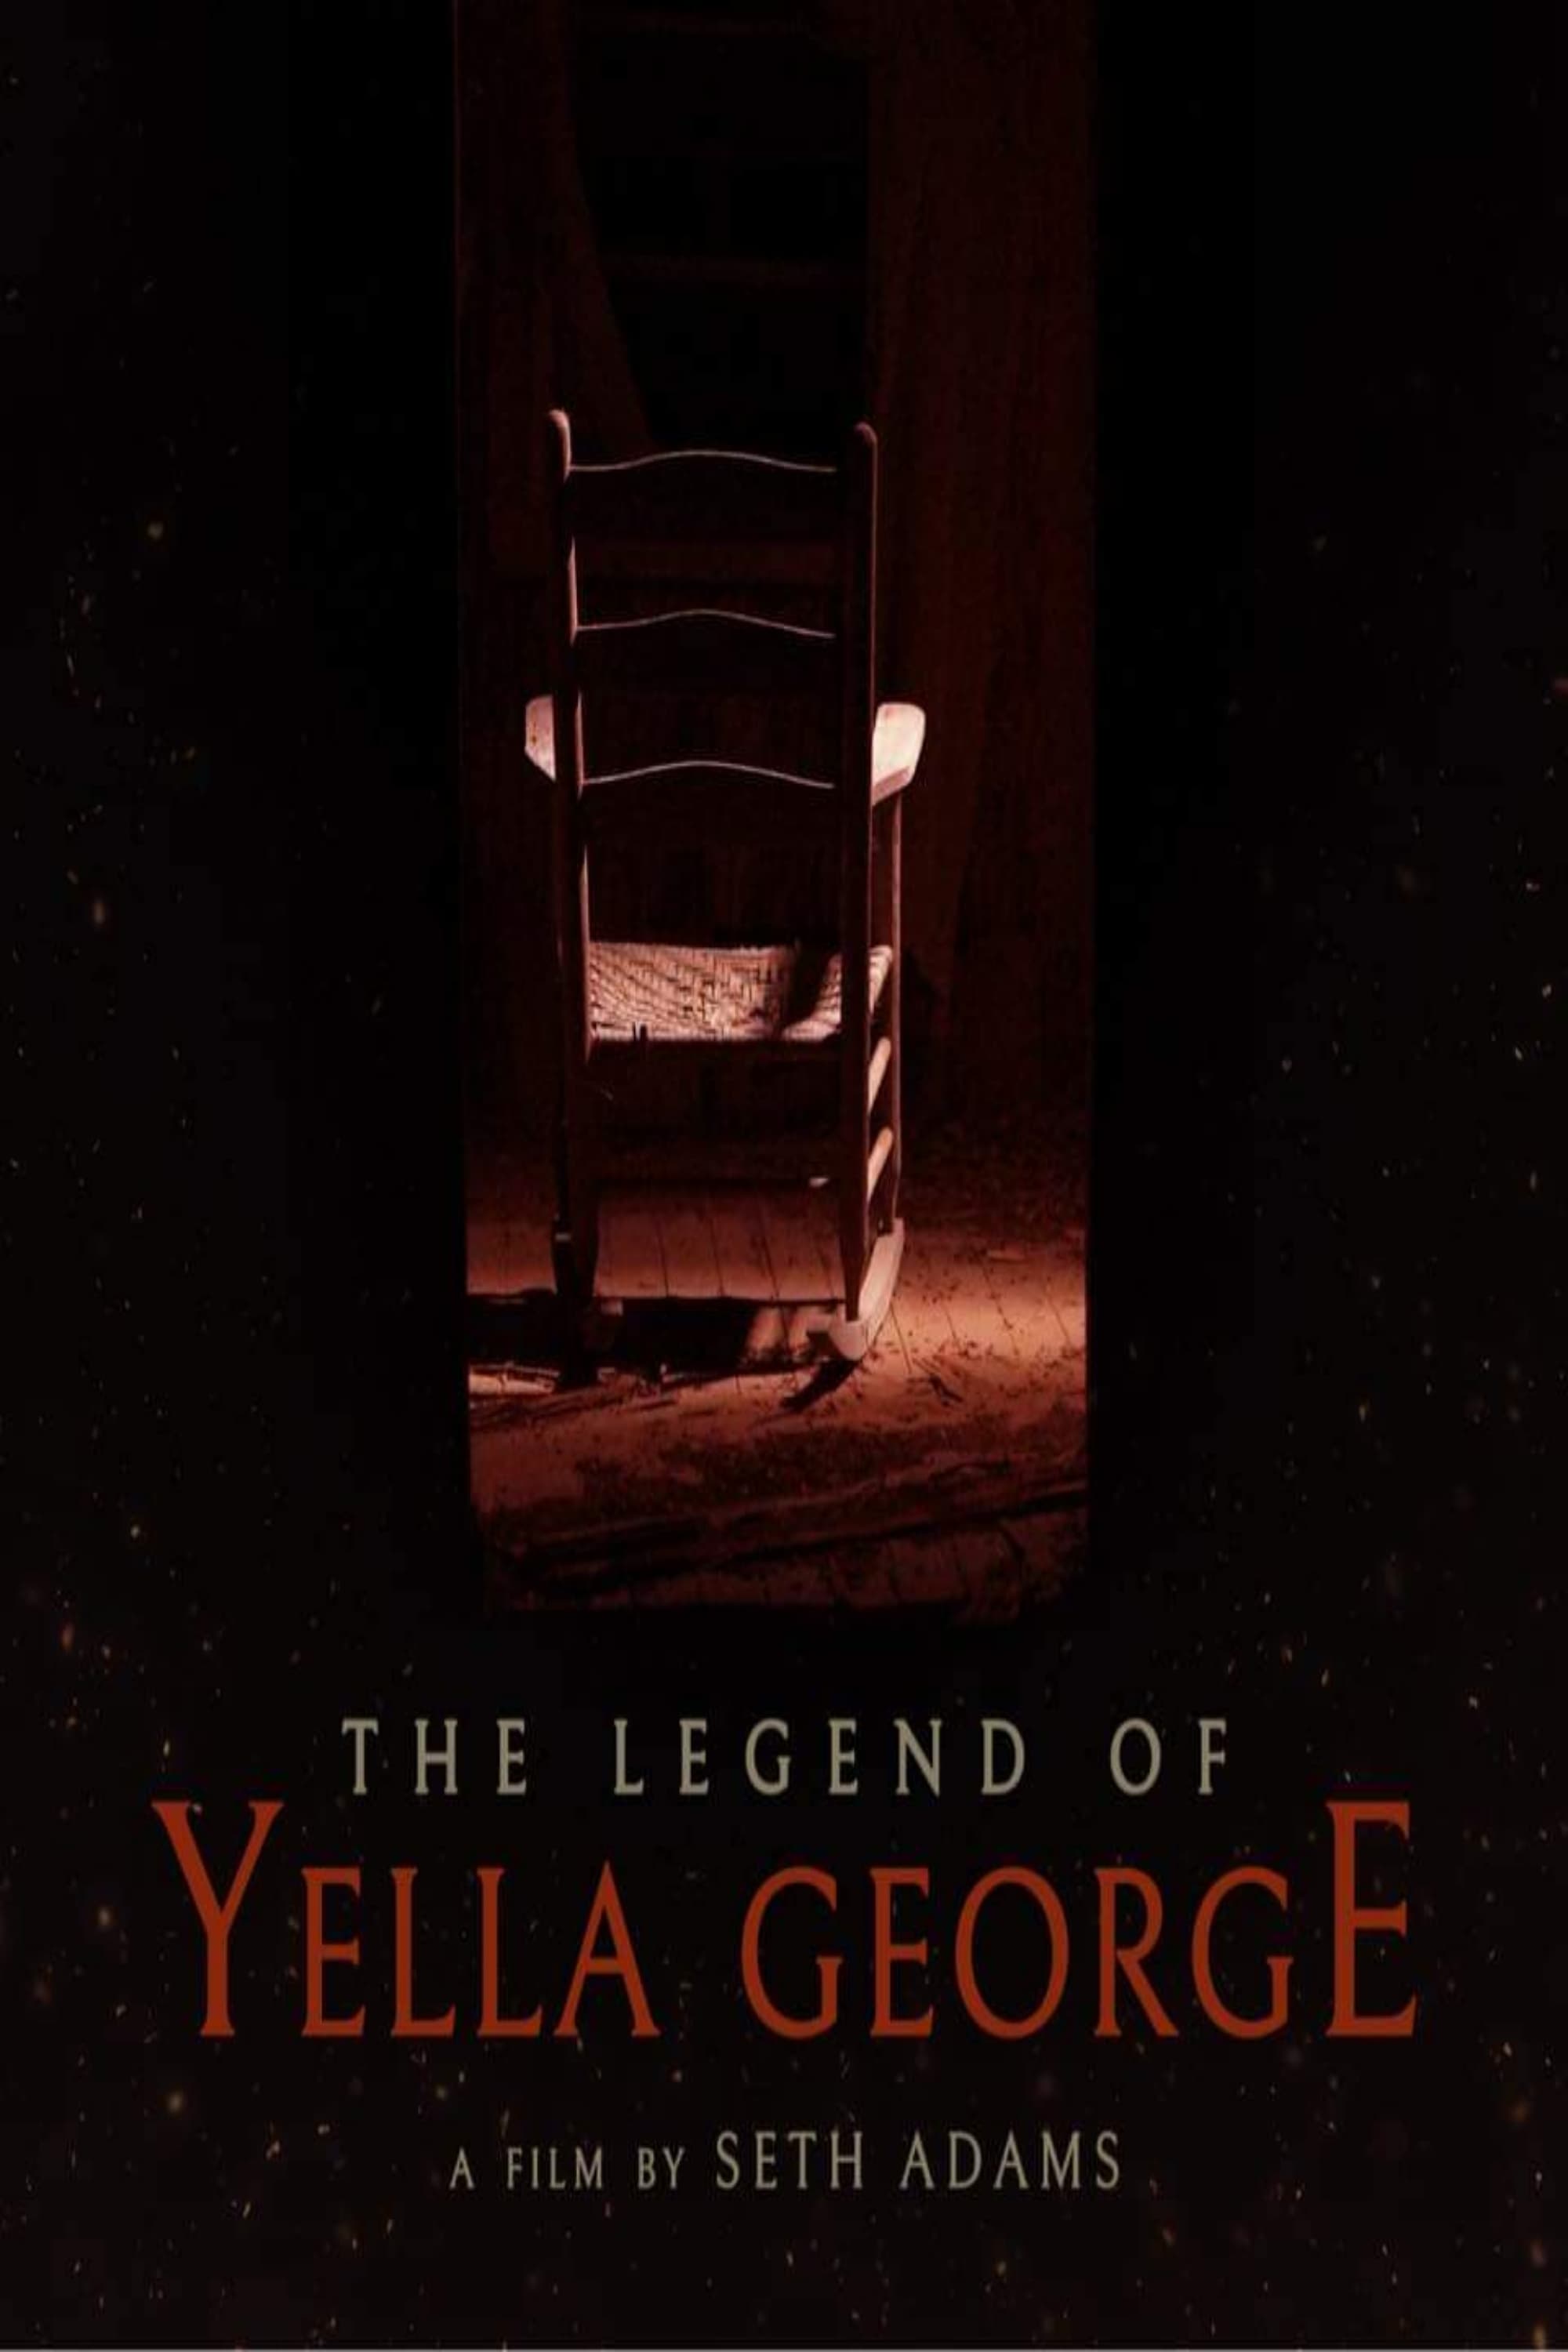 The Legend of Yella George